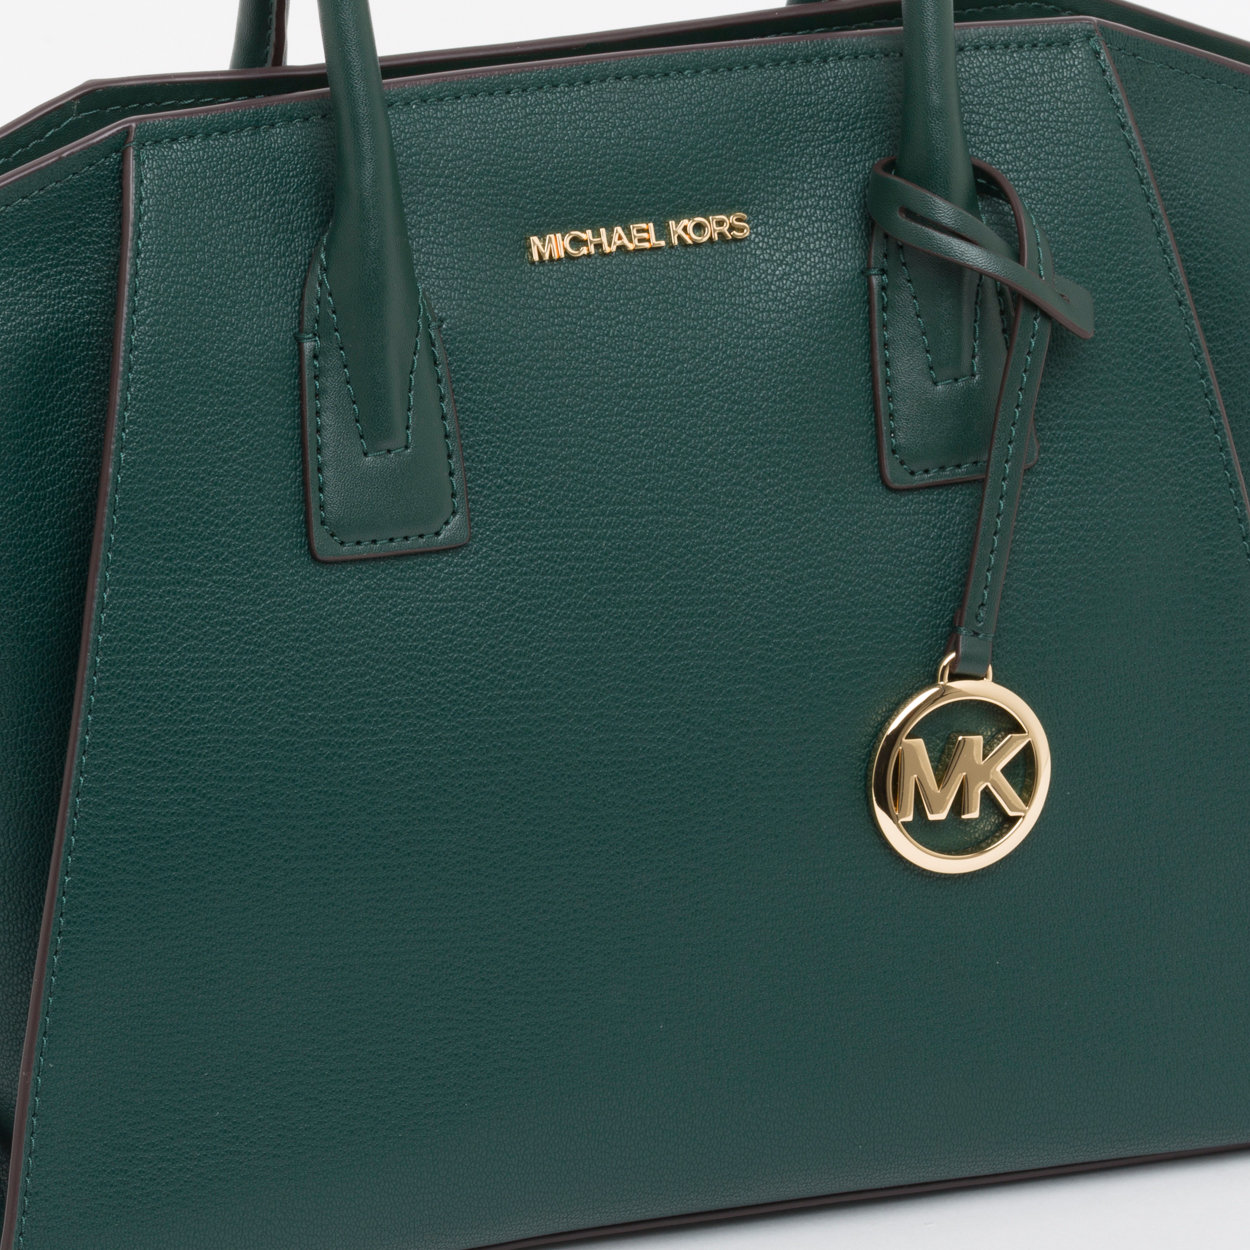 Michael Kors Avril bag in forest green leather - Michael Kors - Purchase on  Ventis.